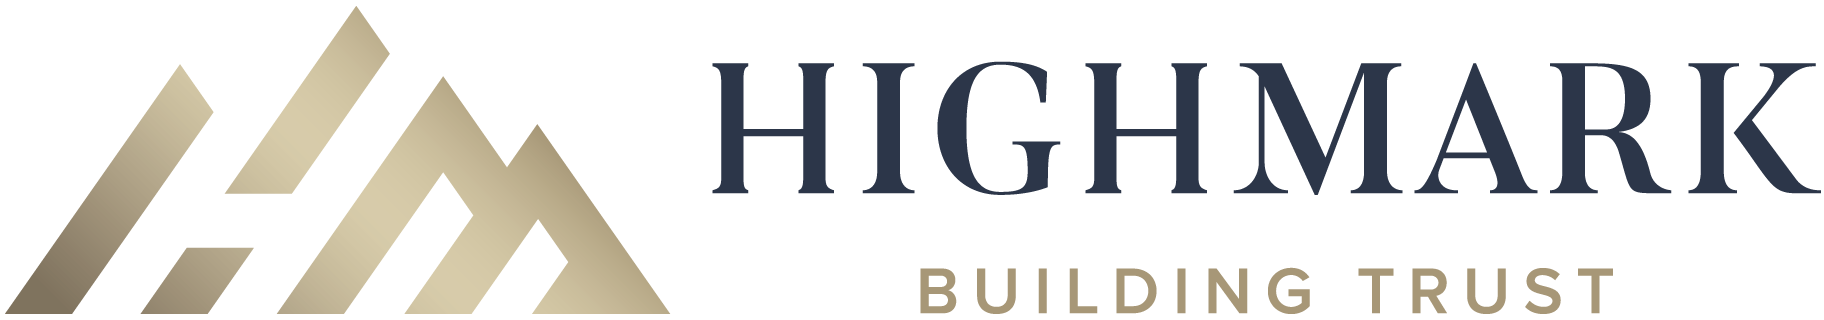 Highmark Building Trust Logo Gold